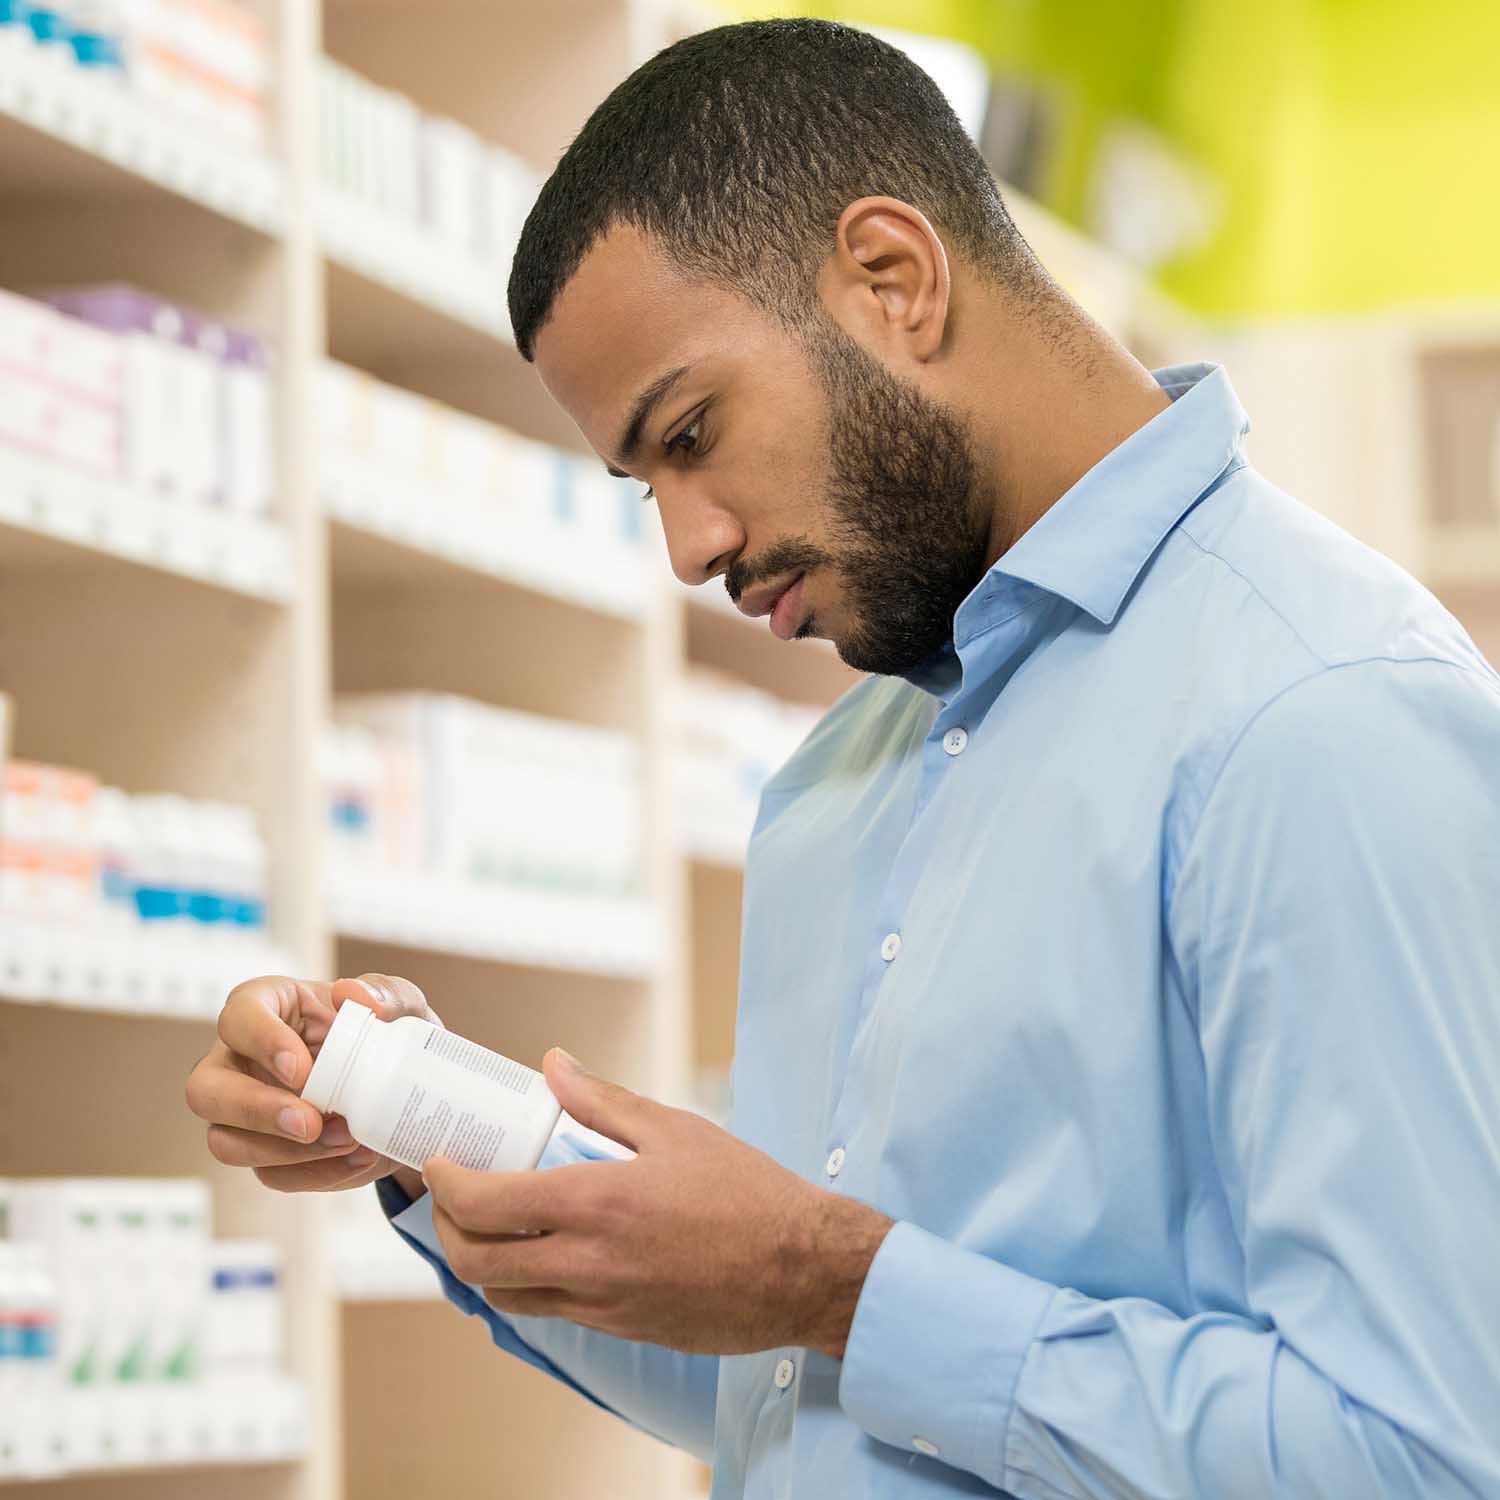 Beard Man Choosing Supplement In Drugstore